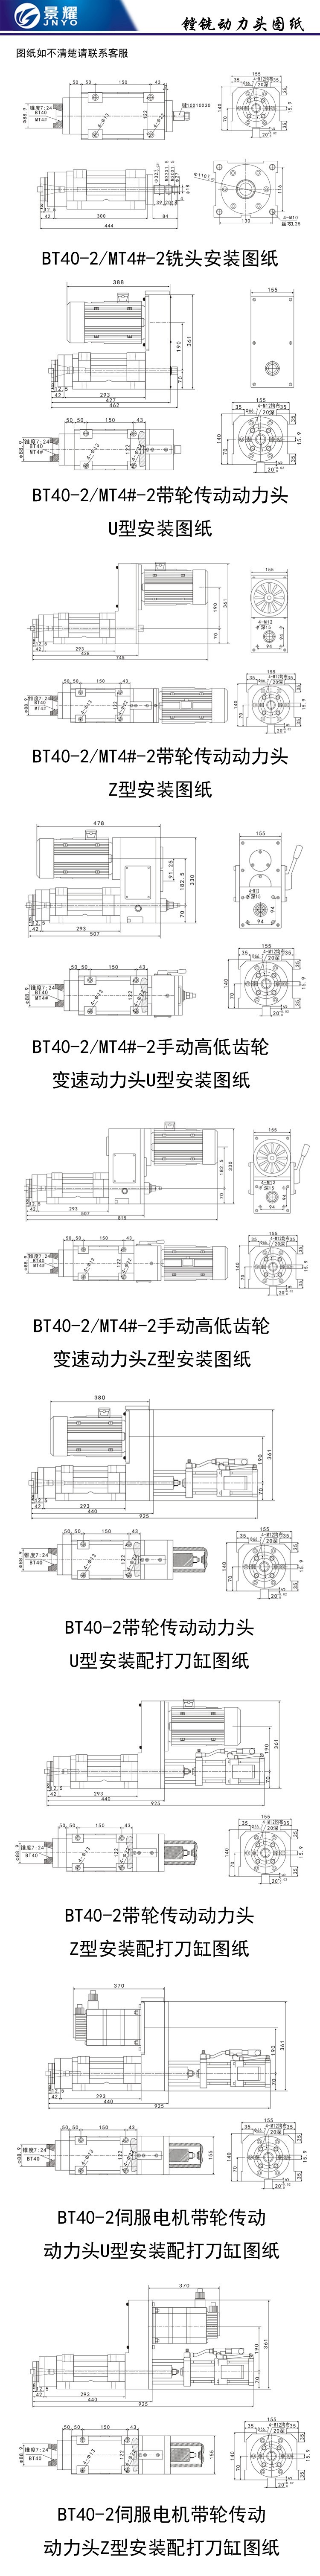 BT40-2鏜銑動力頭圖紙